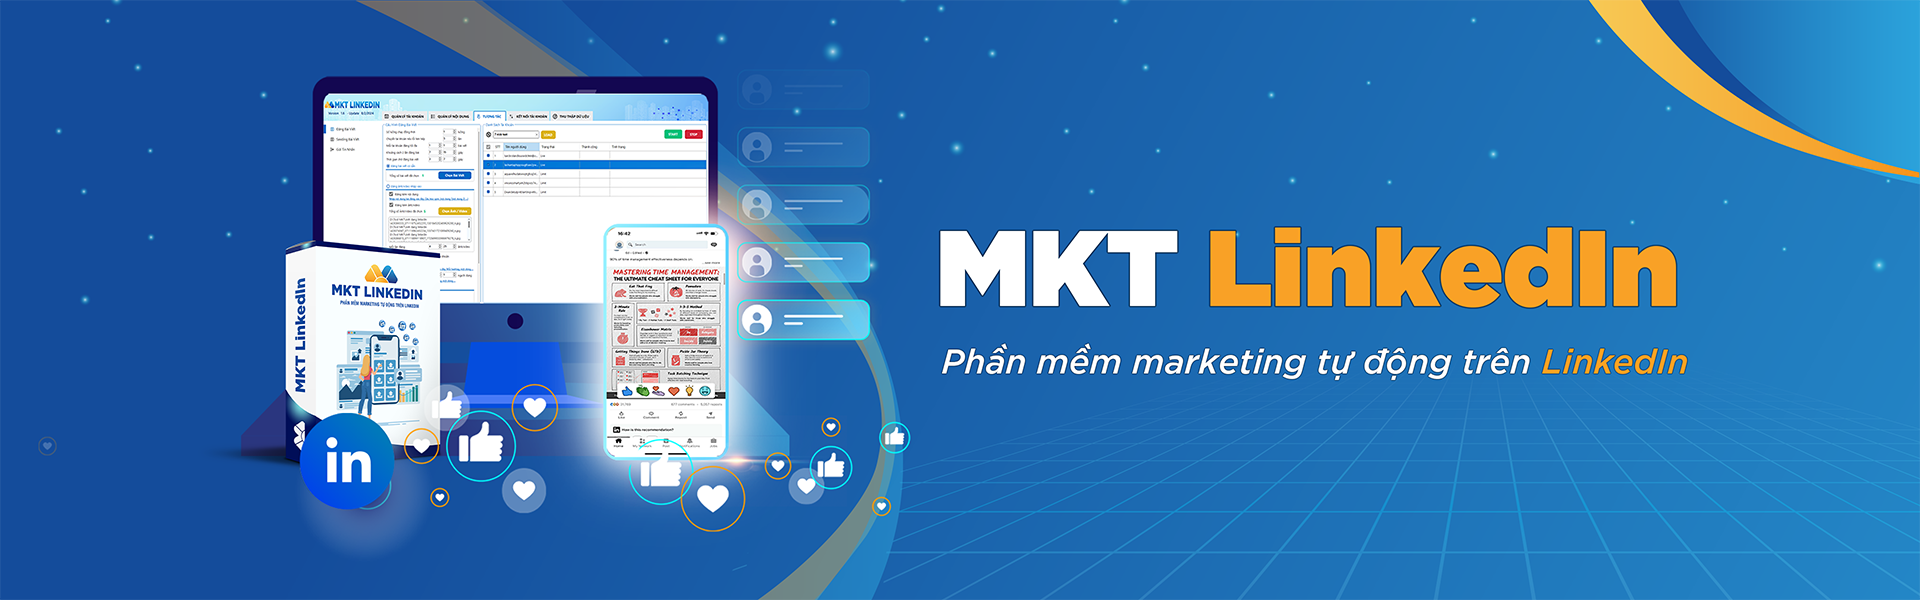 Banner Slide MKT LinkedIn